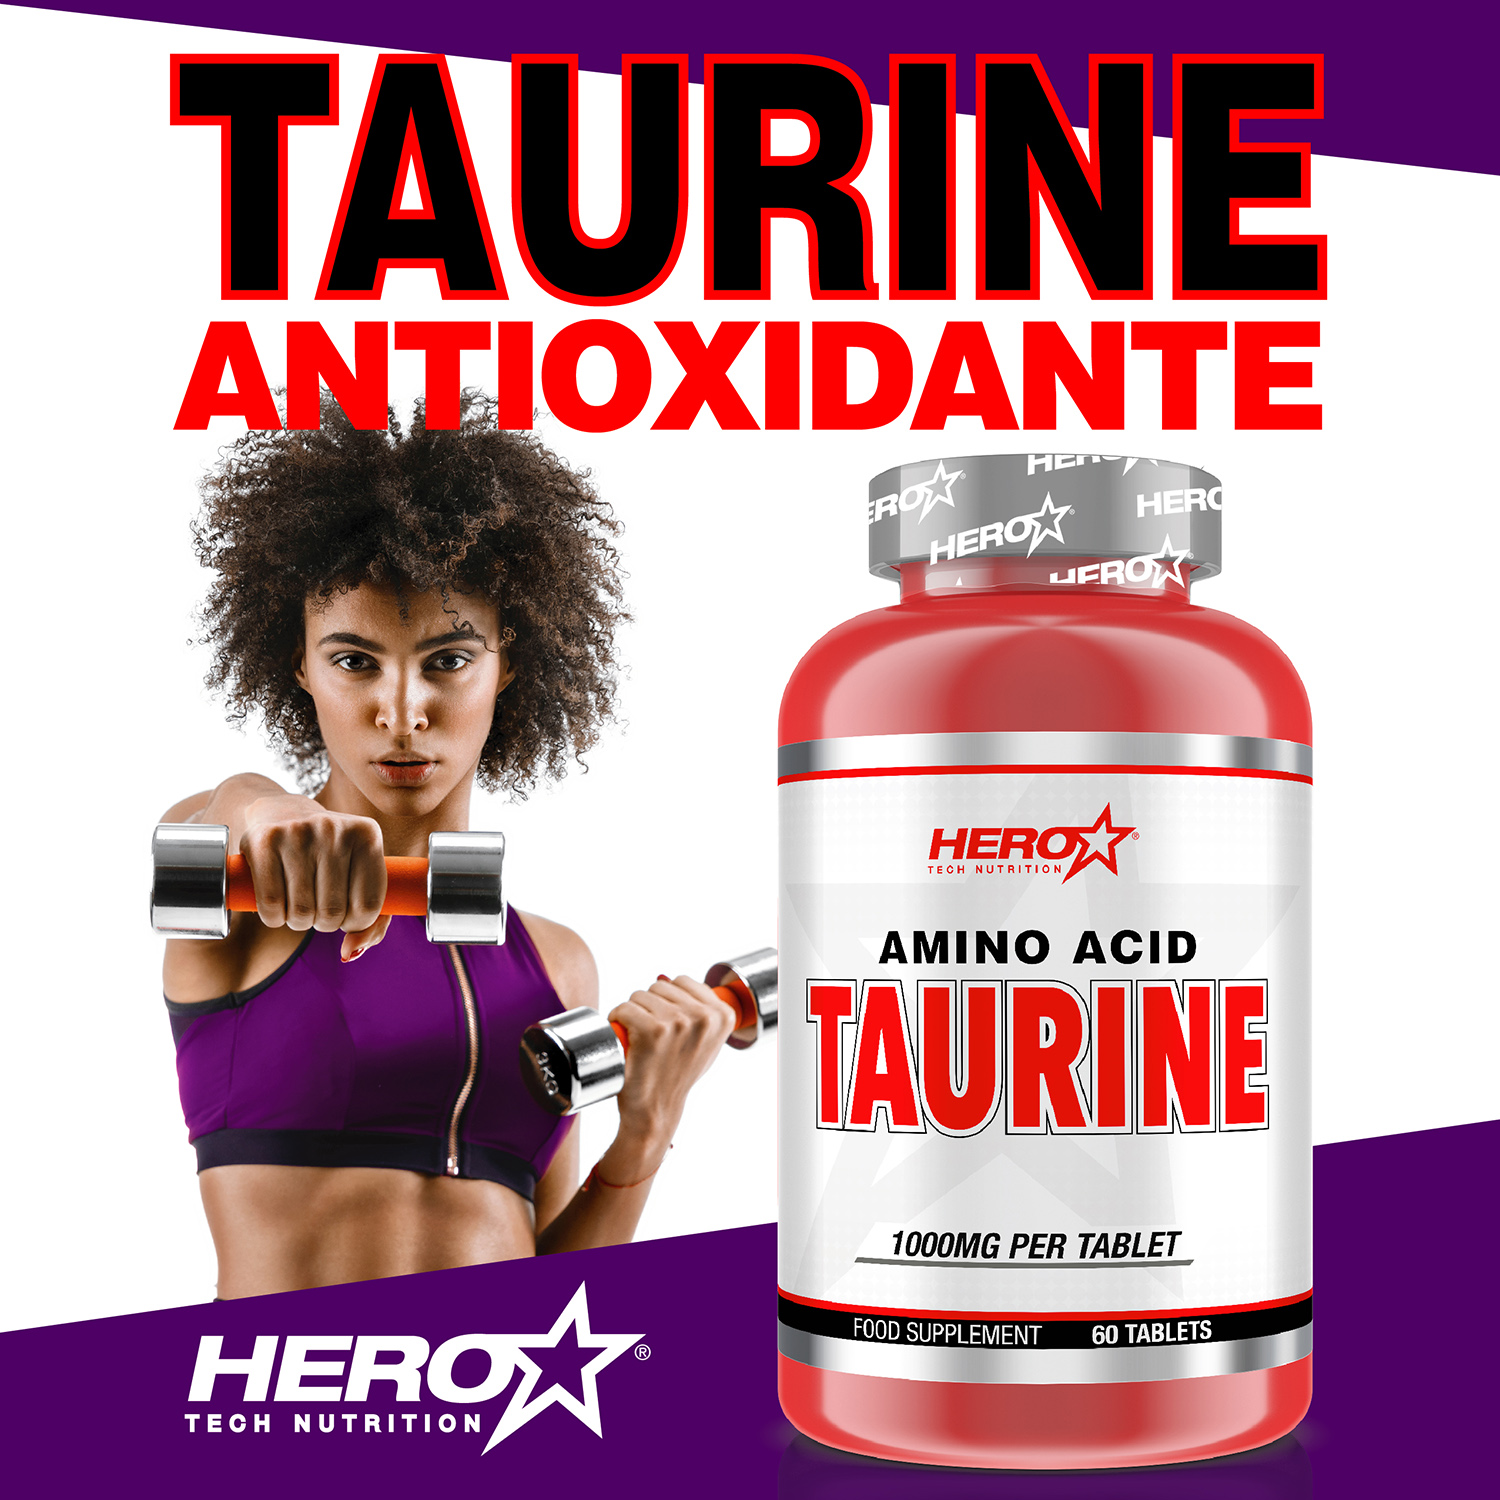 TAURINE TAURINA HERO TECH NUTRITION ANTIOXIDANTE